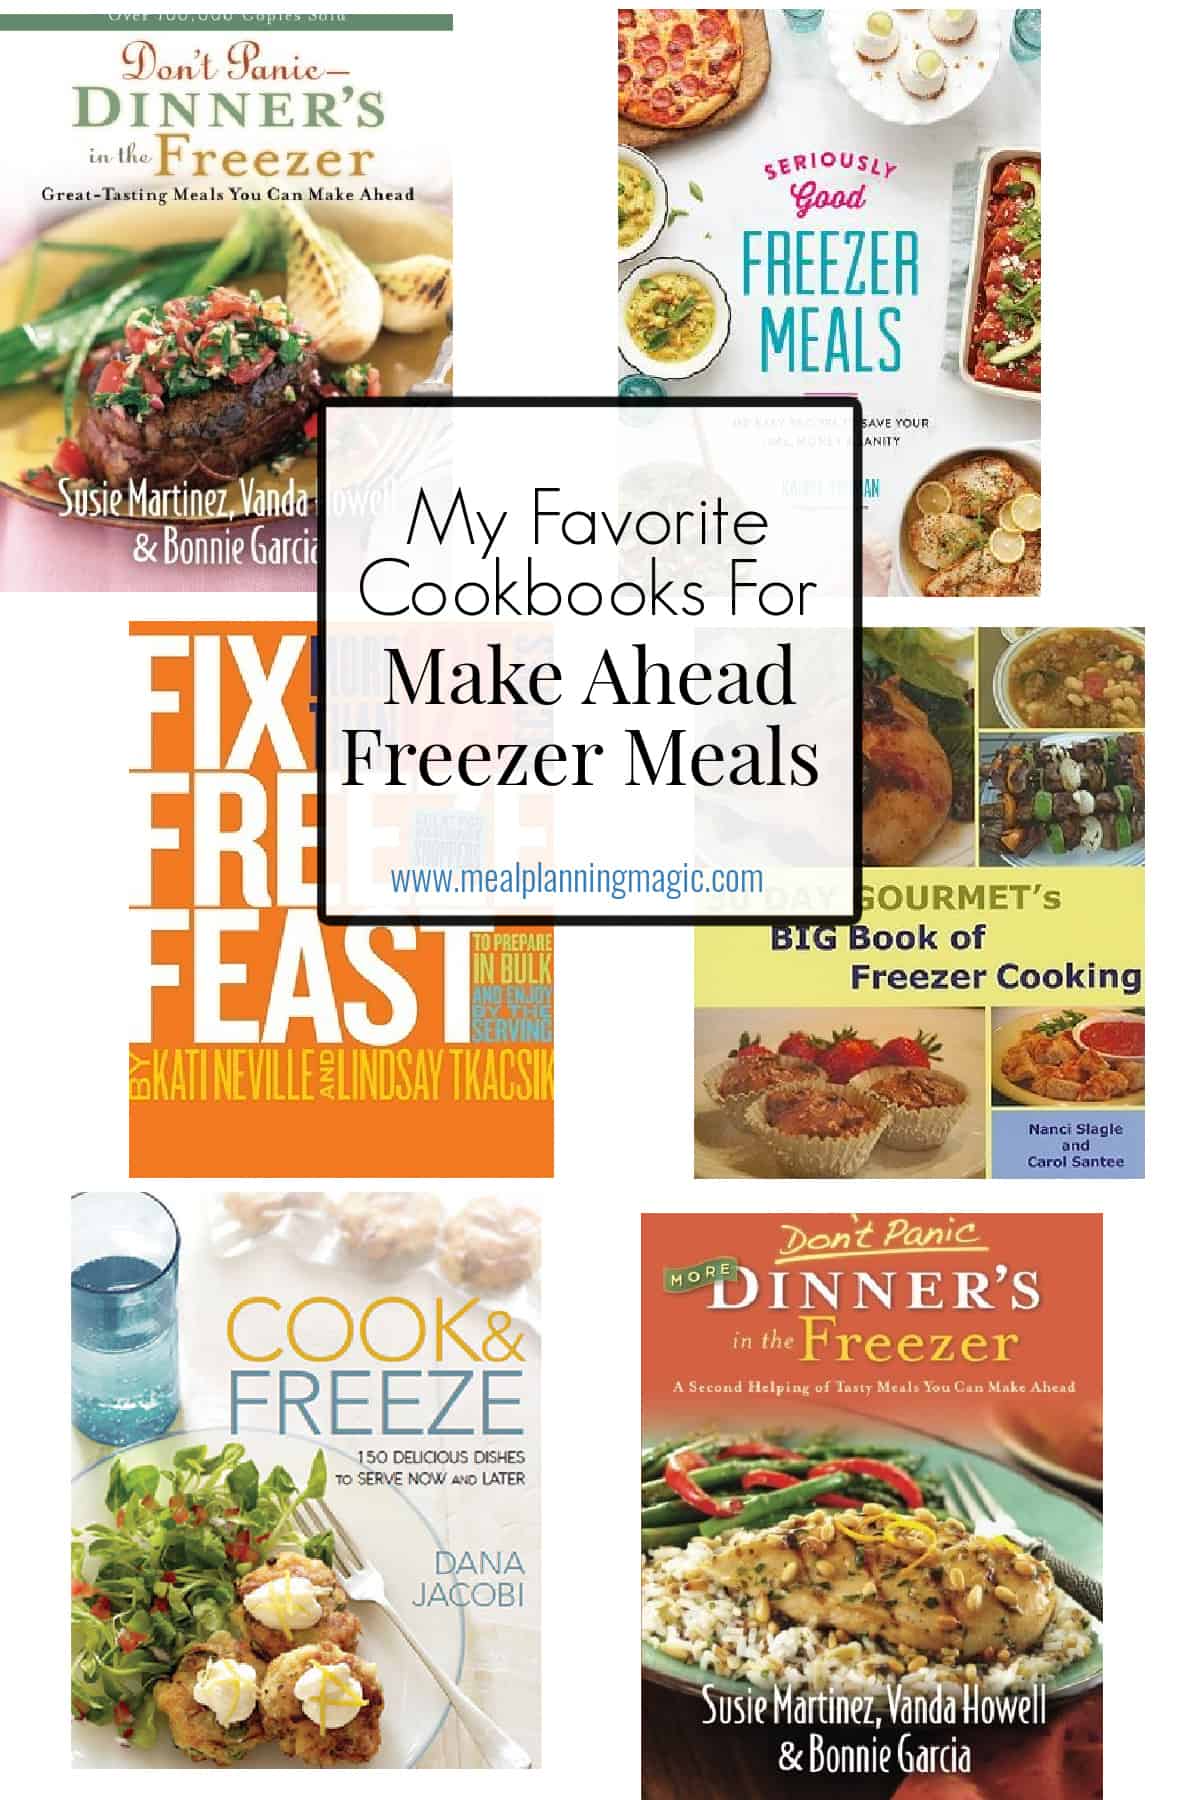 Collection of 150 Best Dash Recipes Dash Diet Cookbook